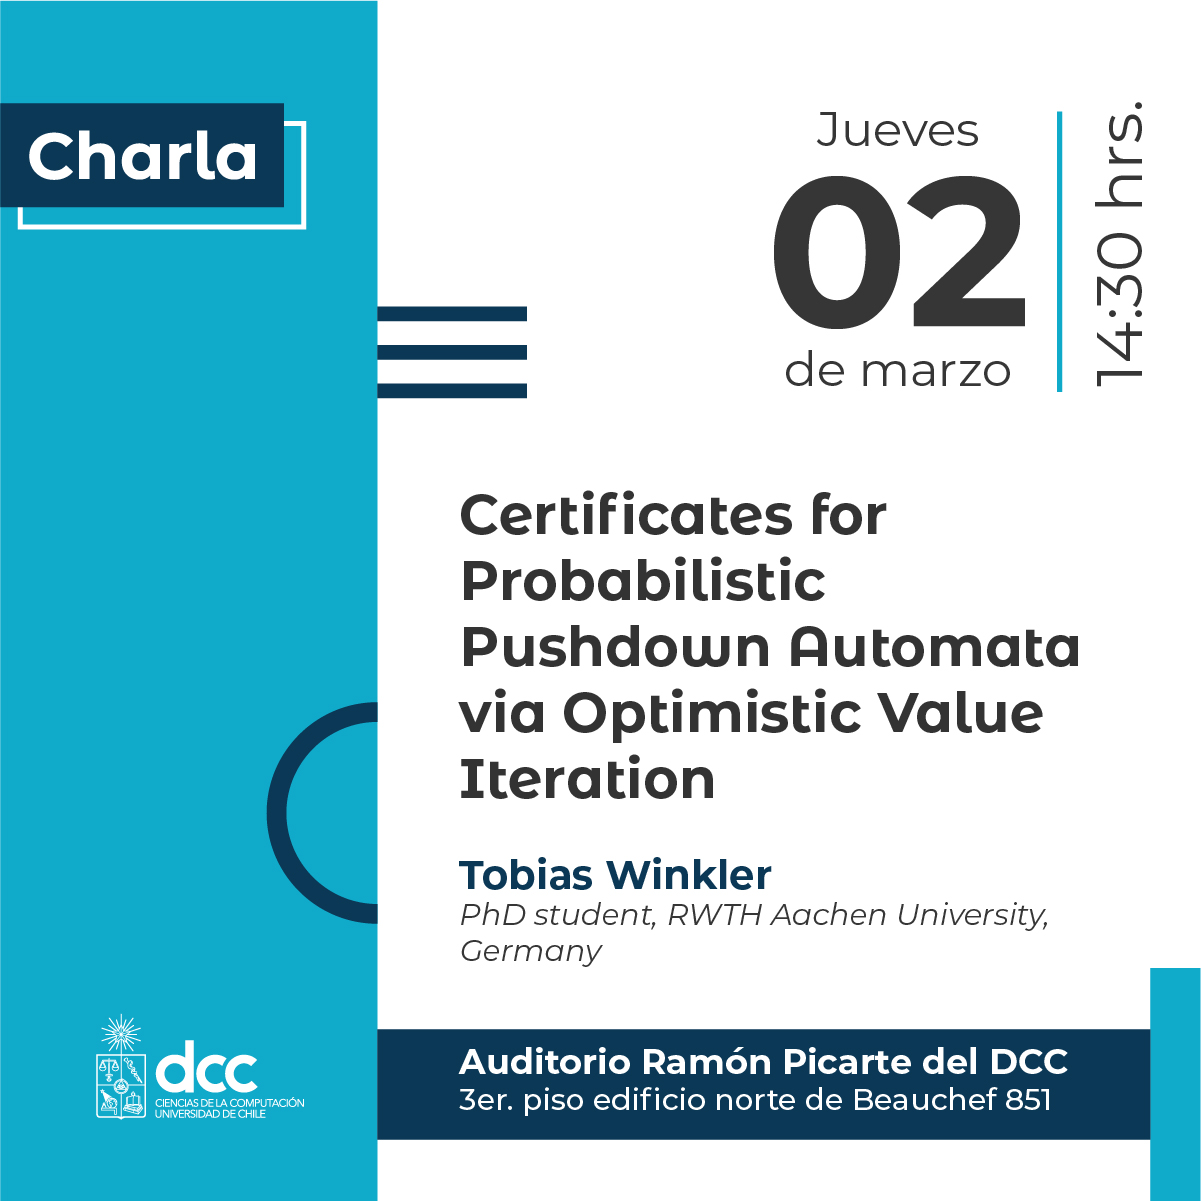 Charla: "Certificates for Probabilistic Pushdown Automata via Optimistic Value Iteration"